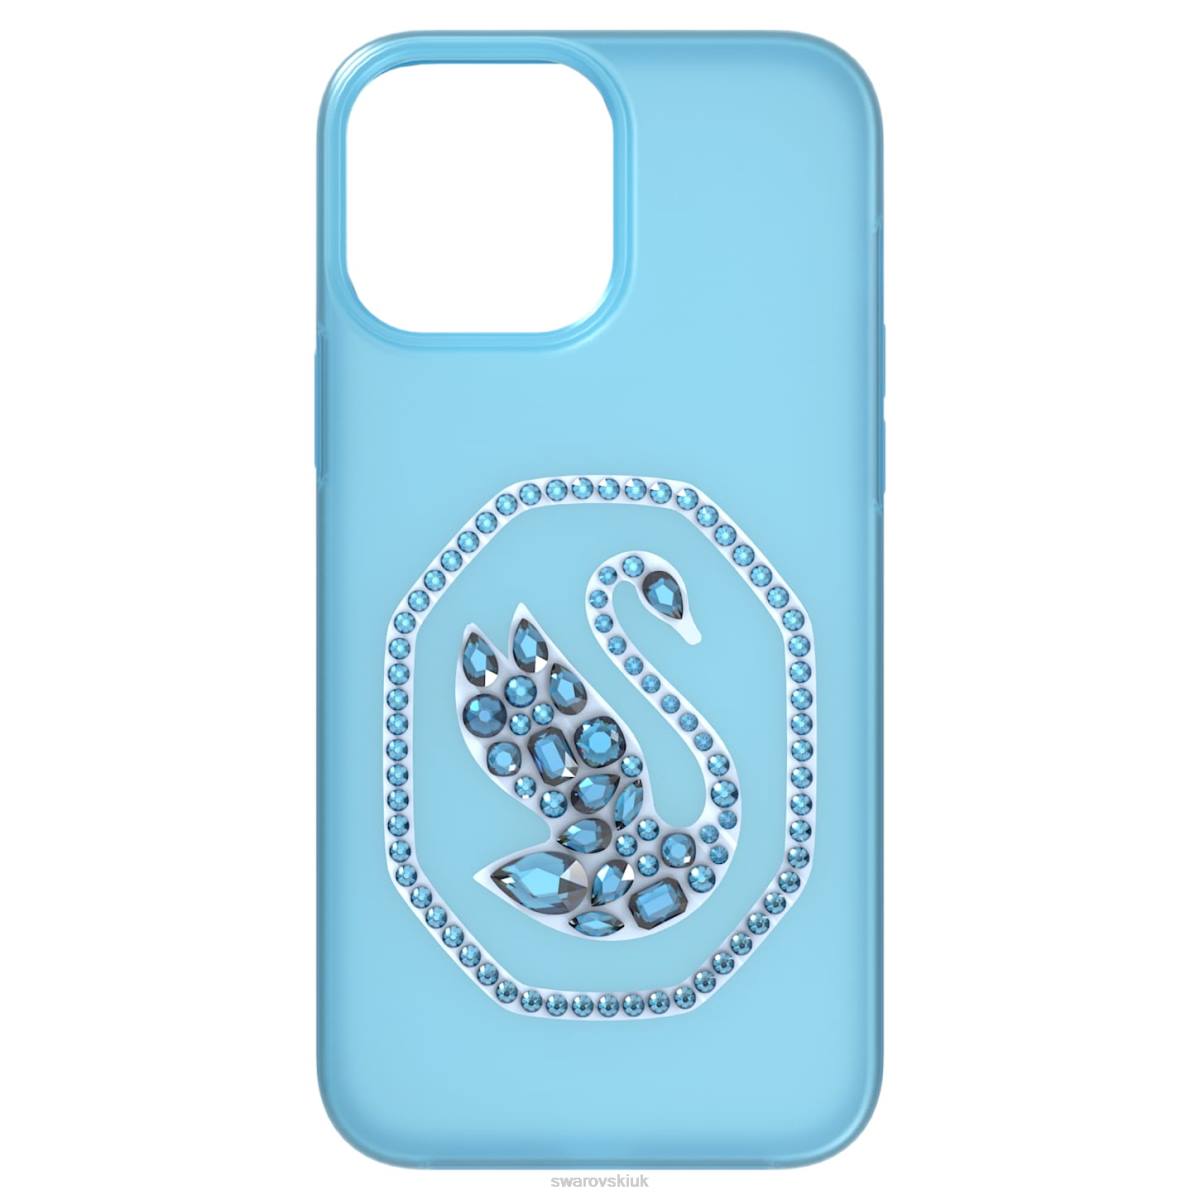 Accessories Swarovski Smartphone case Blue 48JX1362